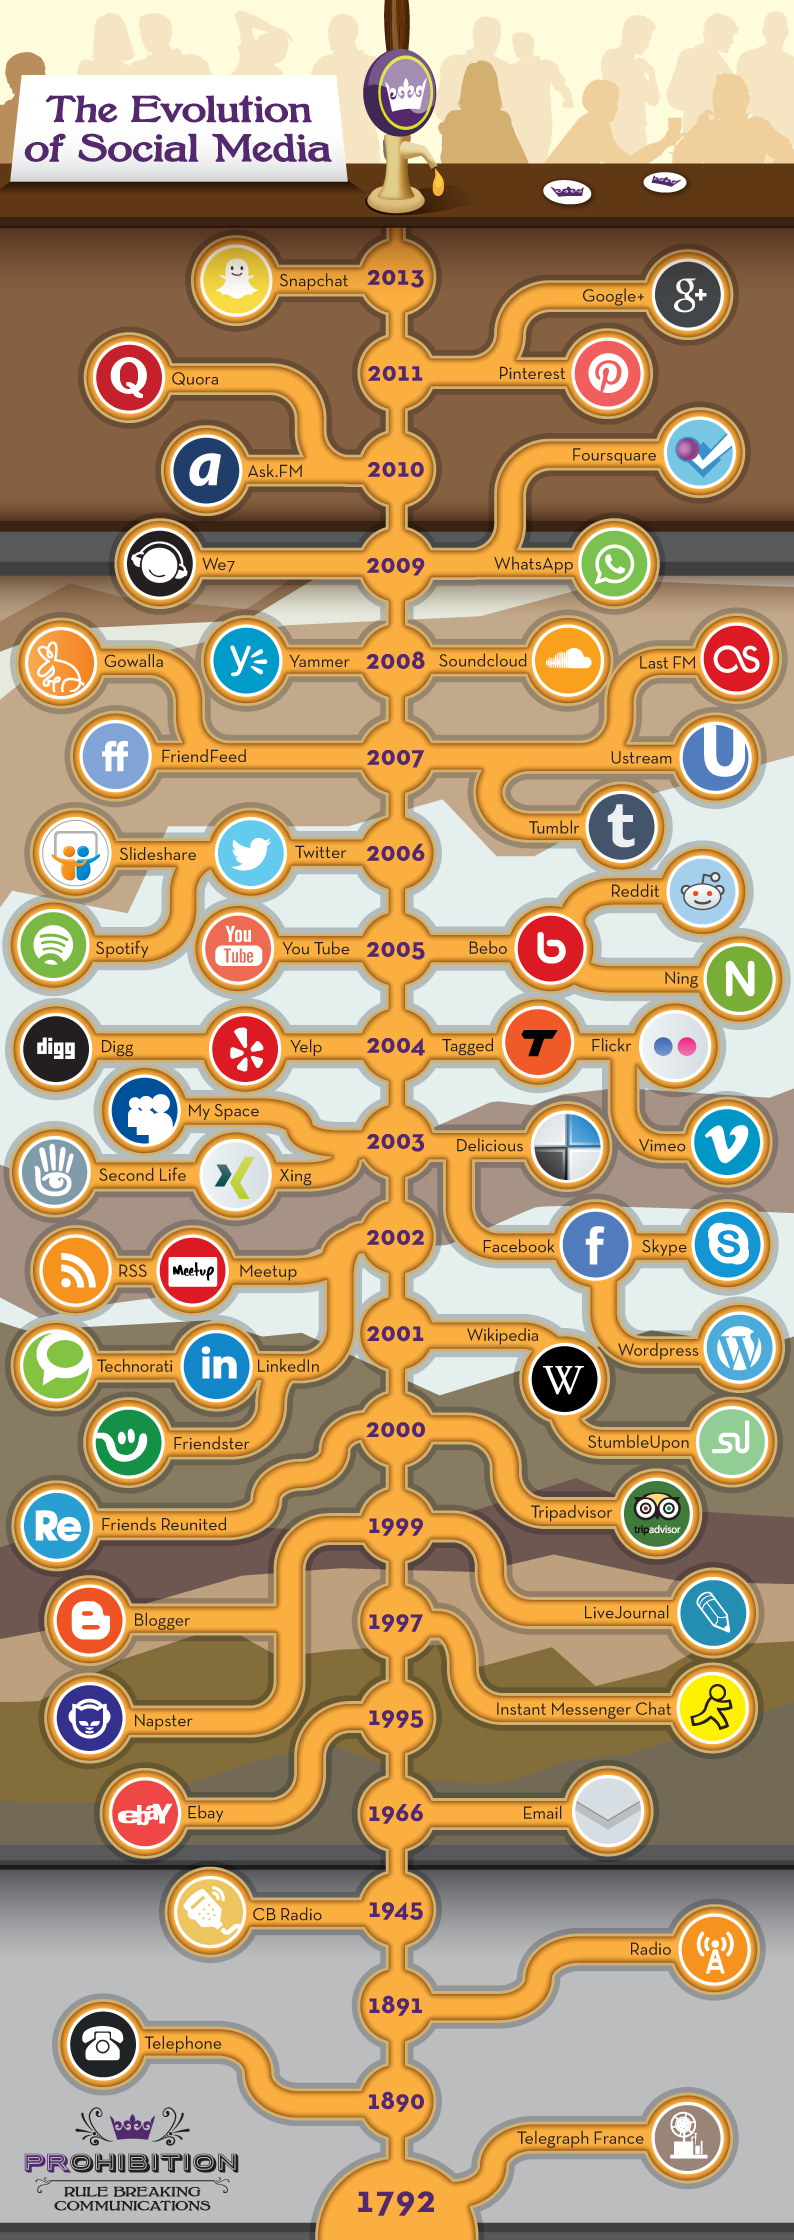 social media evolution-fonte-prohibitionpr.co.uk